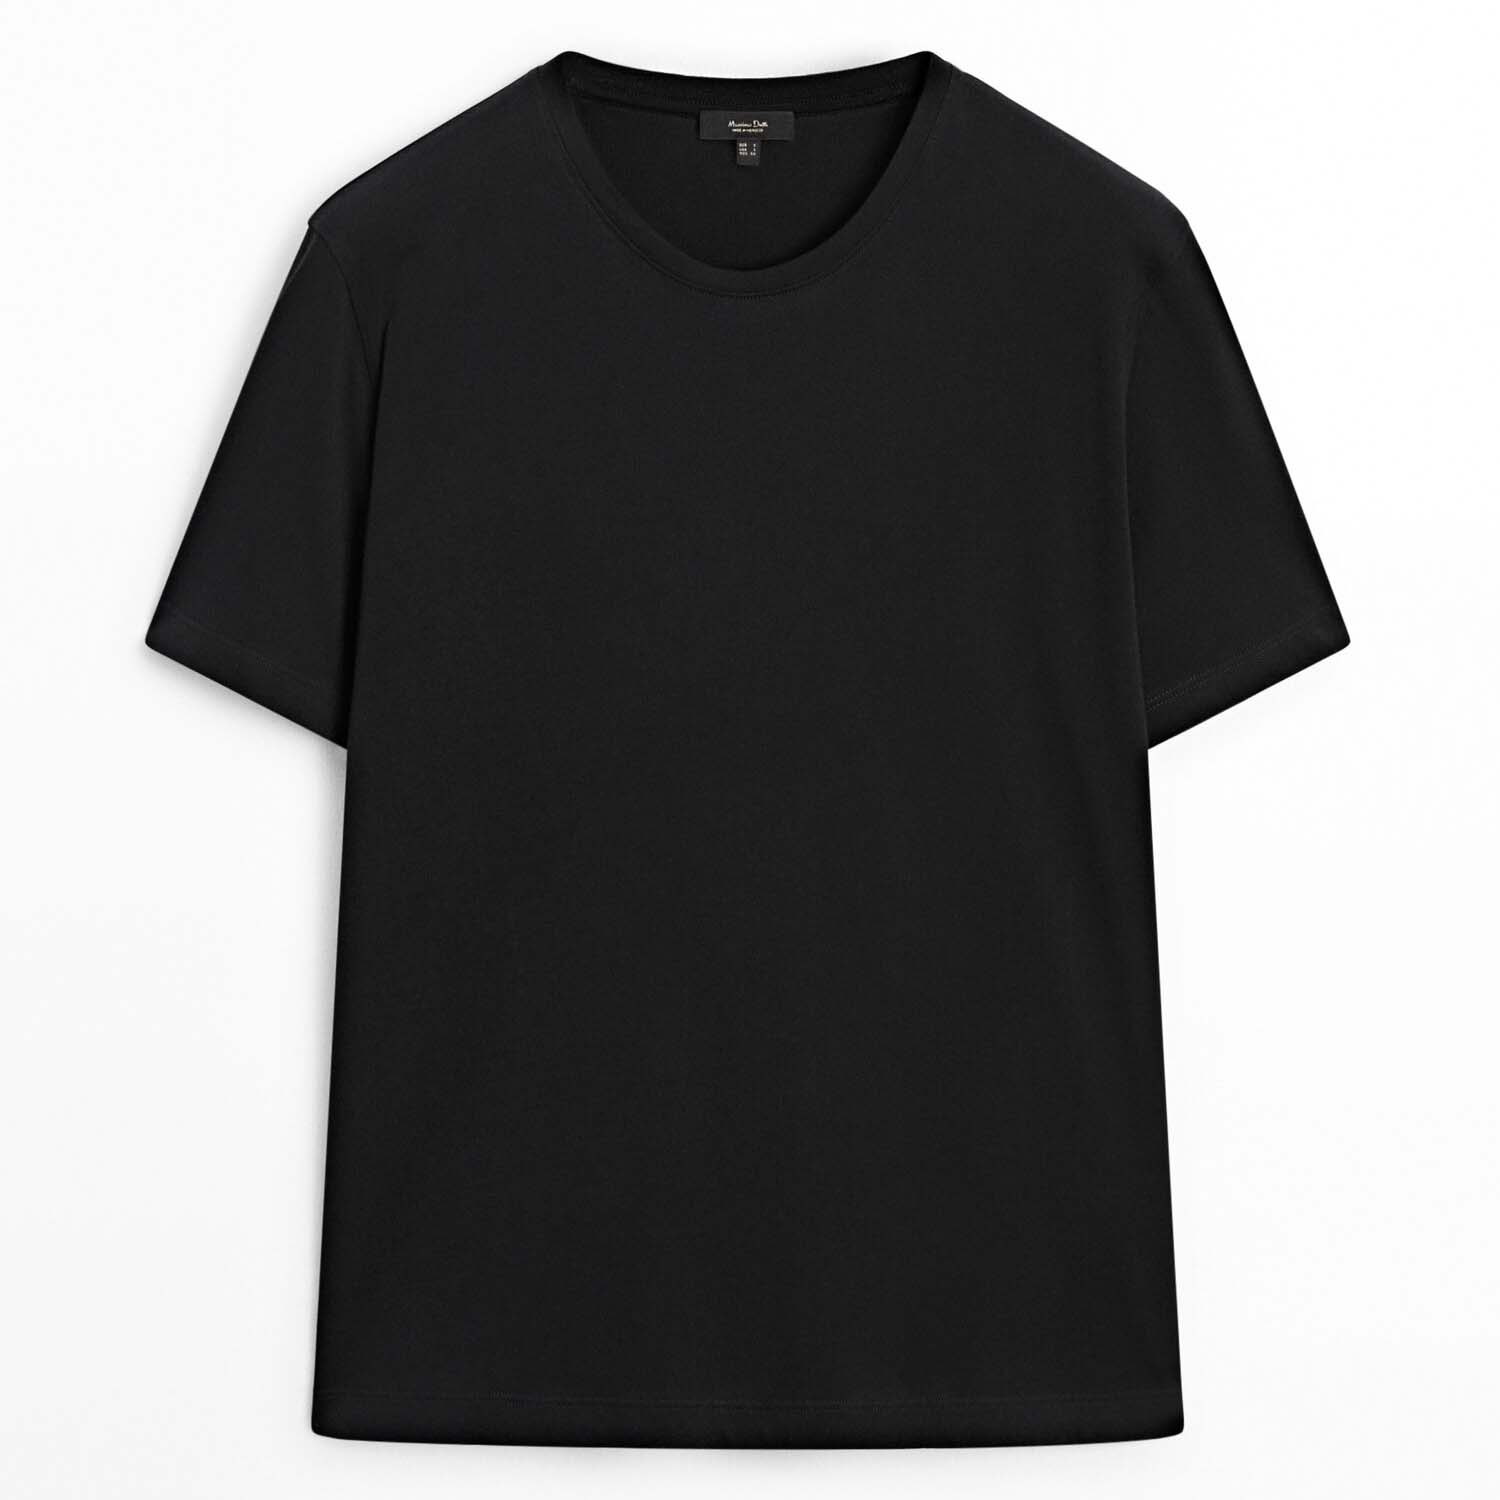 Футболка Massimo Dutti Short Sleeve Cotton, черный цена и фото